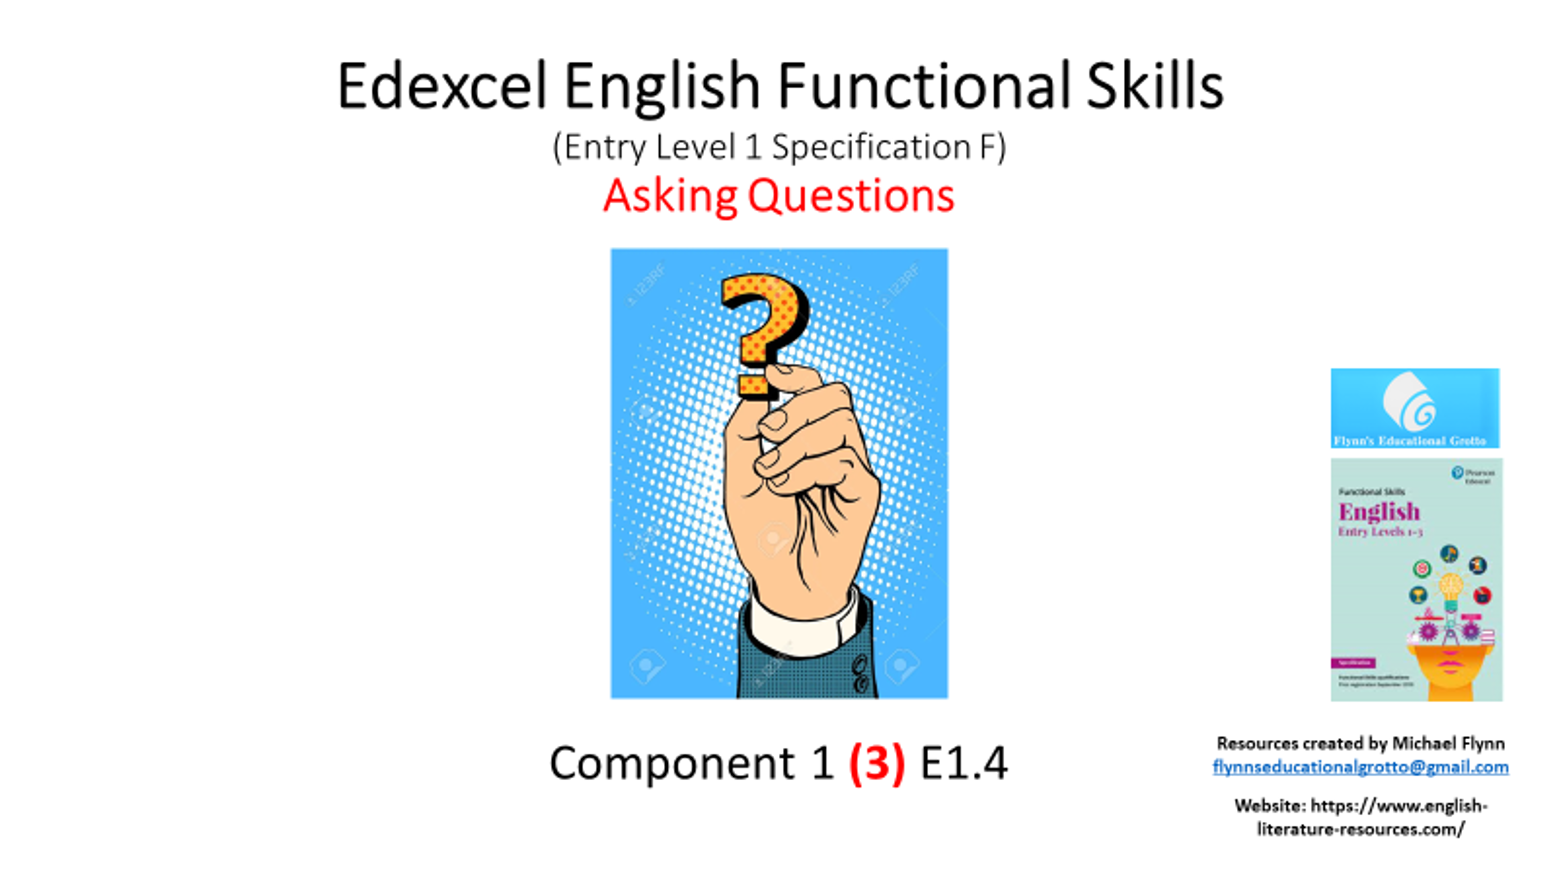 Edexcel English skills question mark graphic.